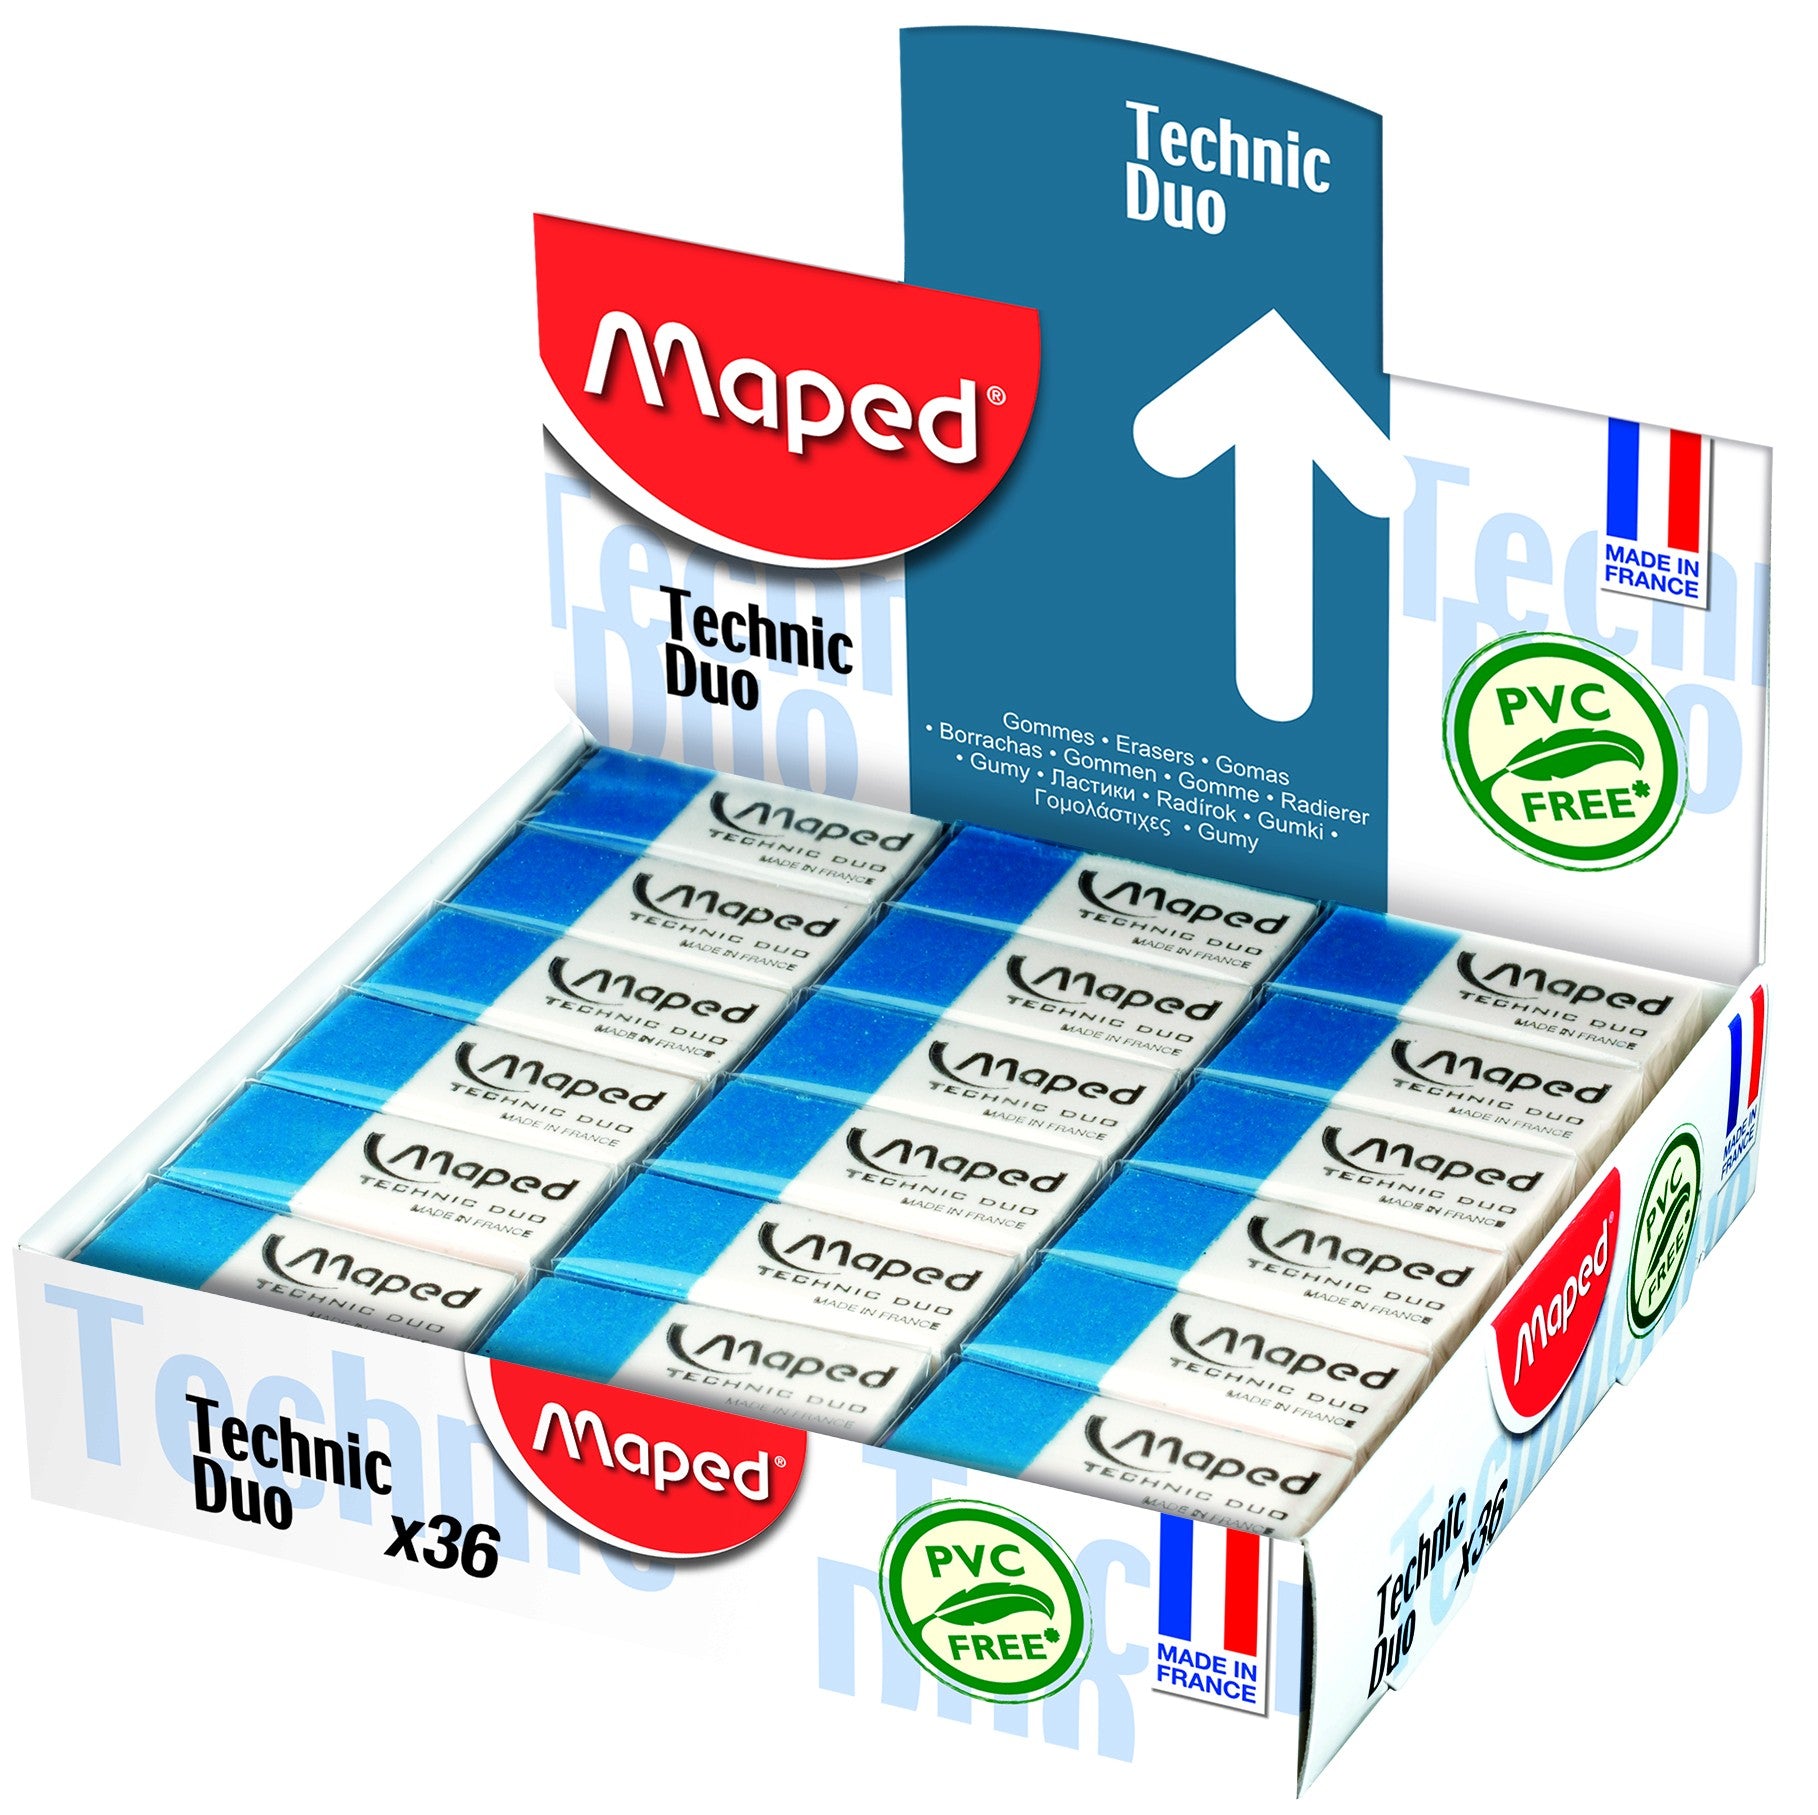 Maped Eraser Technic Duo Display Box